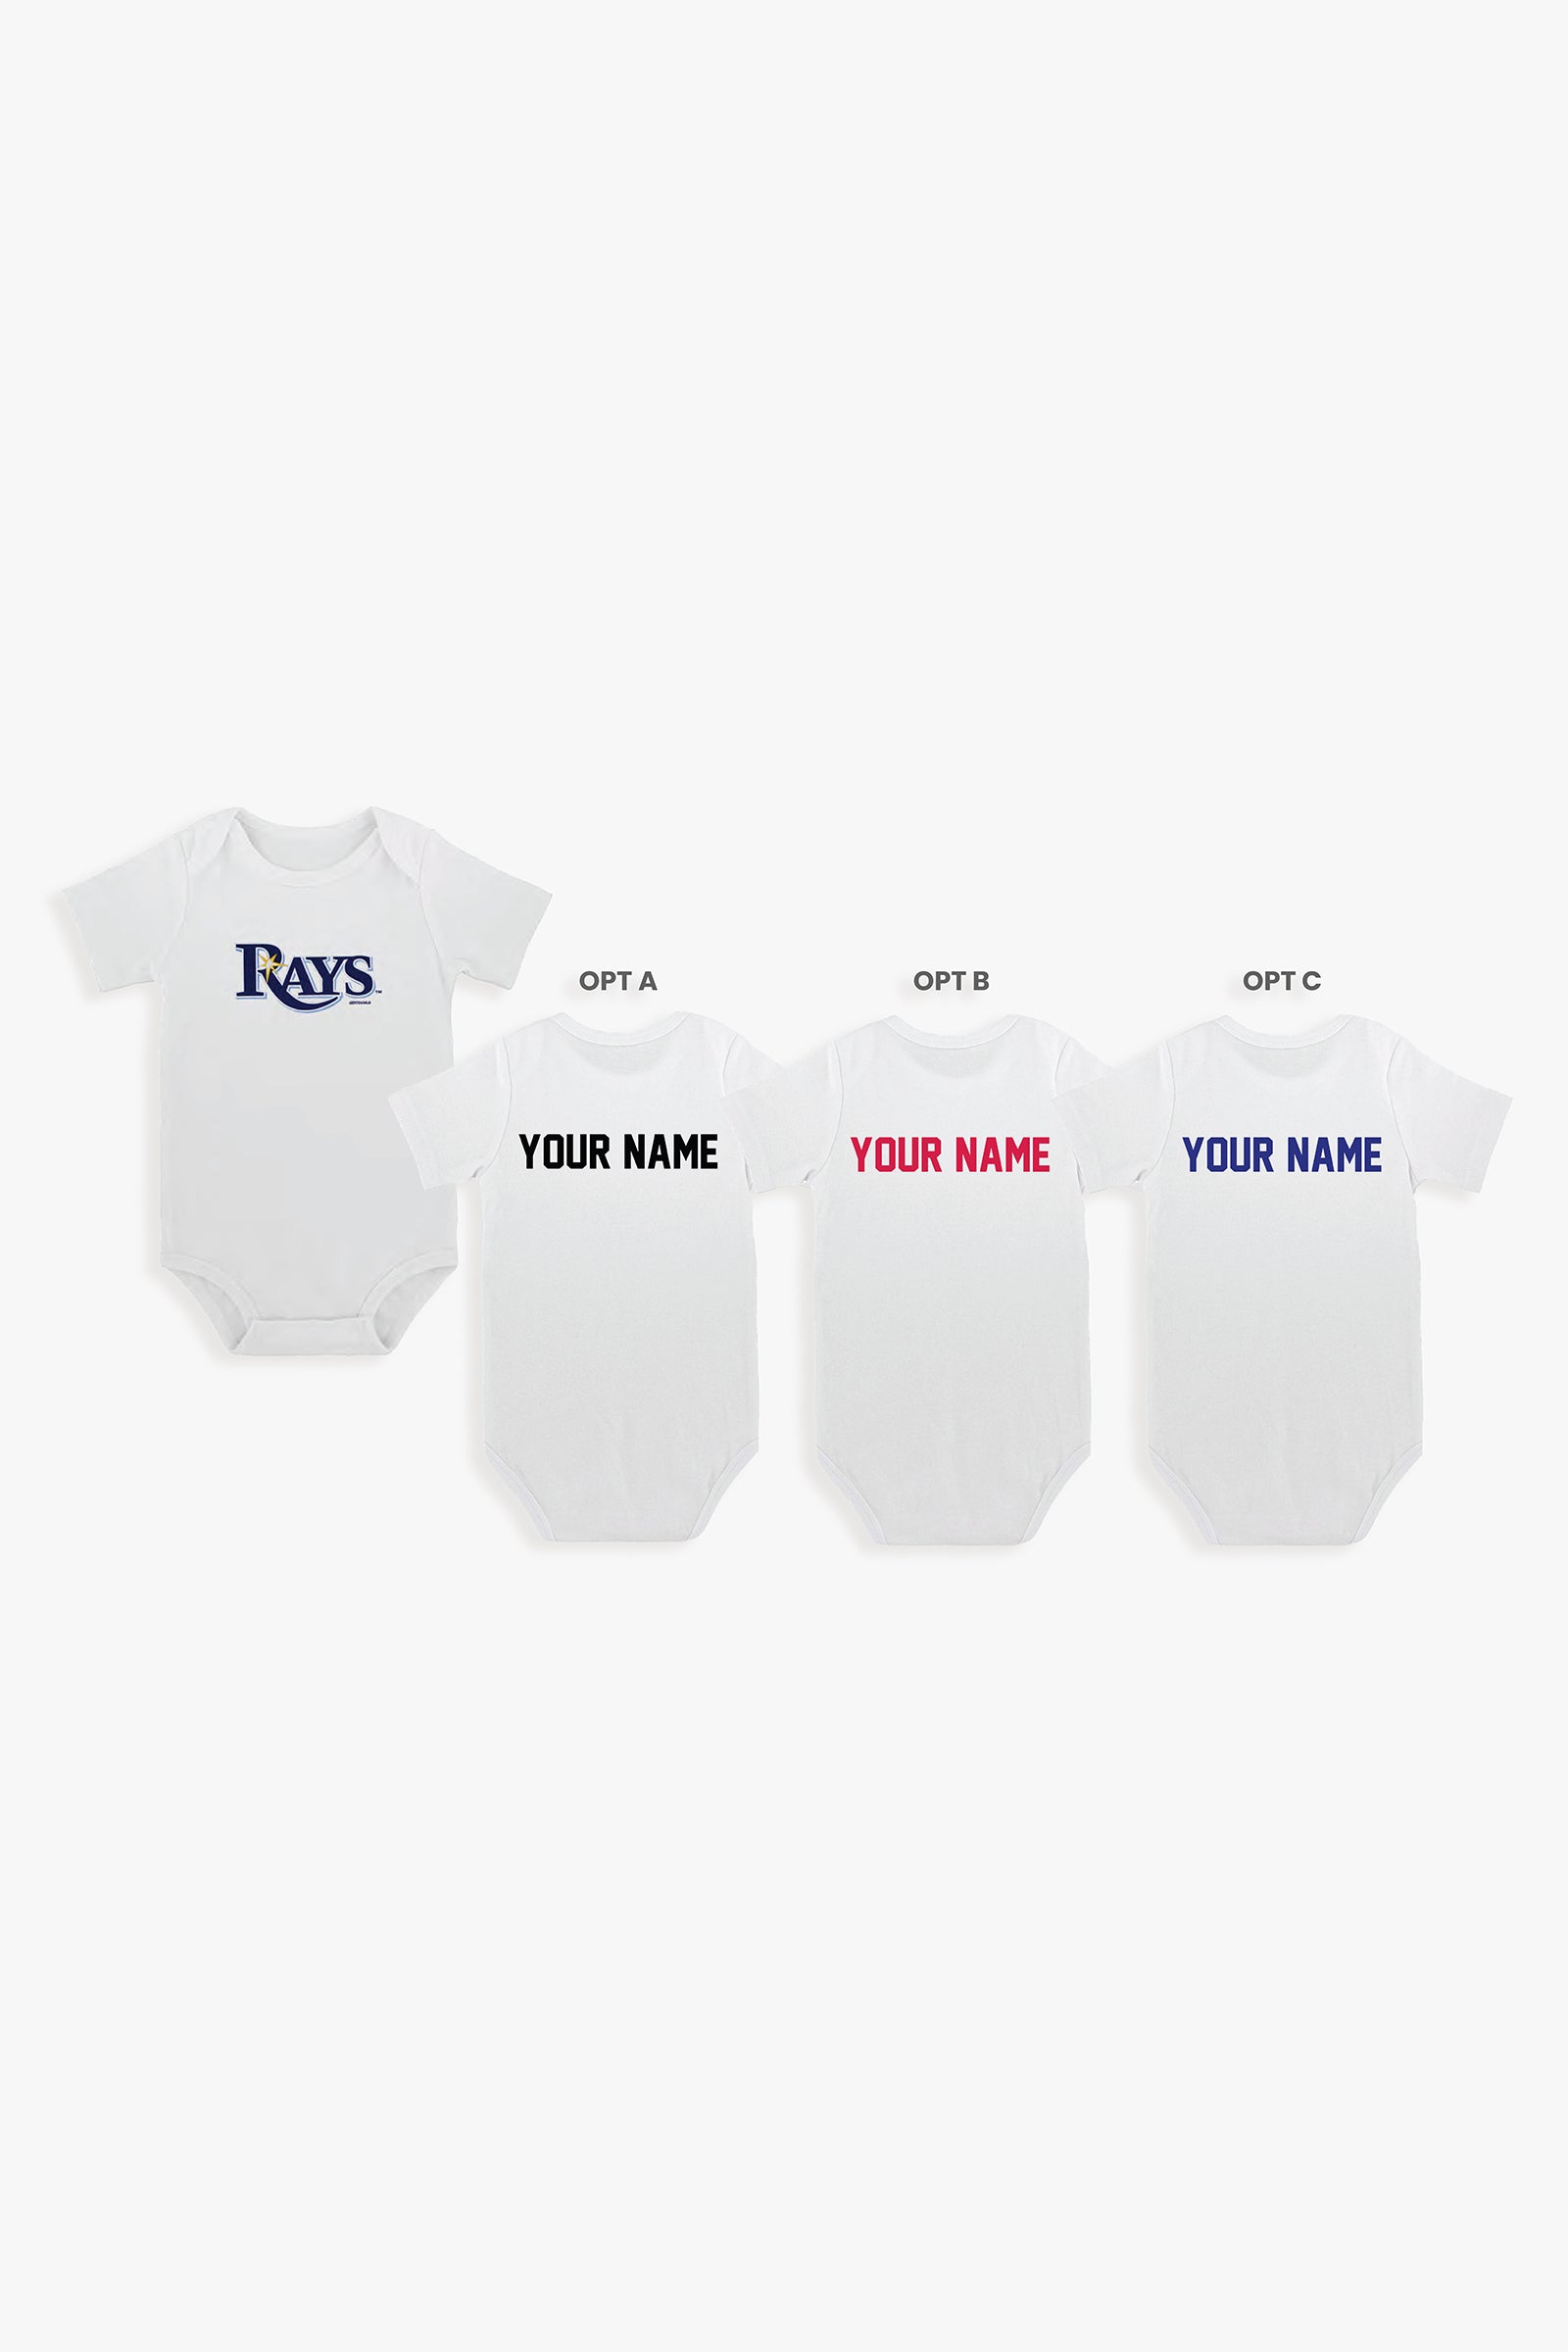 Gertex Customizable MLB Baby Bodysuit in White (3-6 Months)